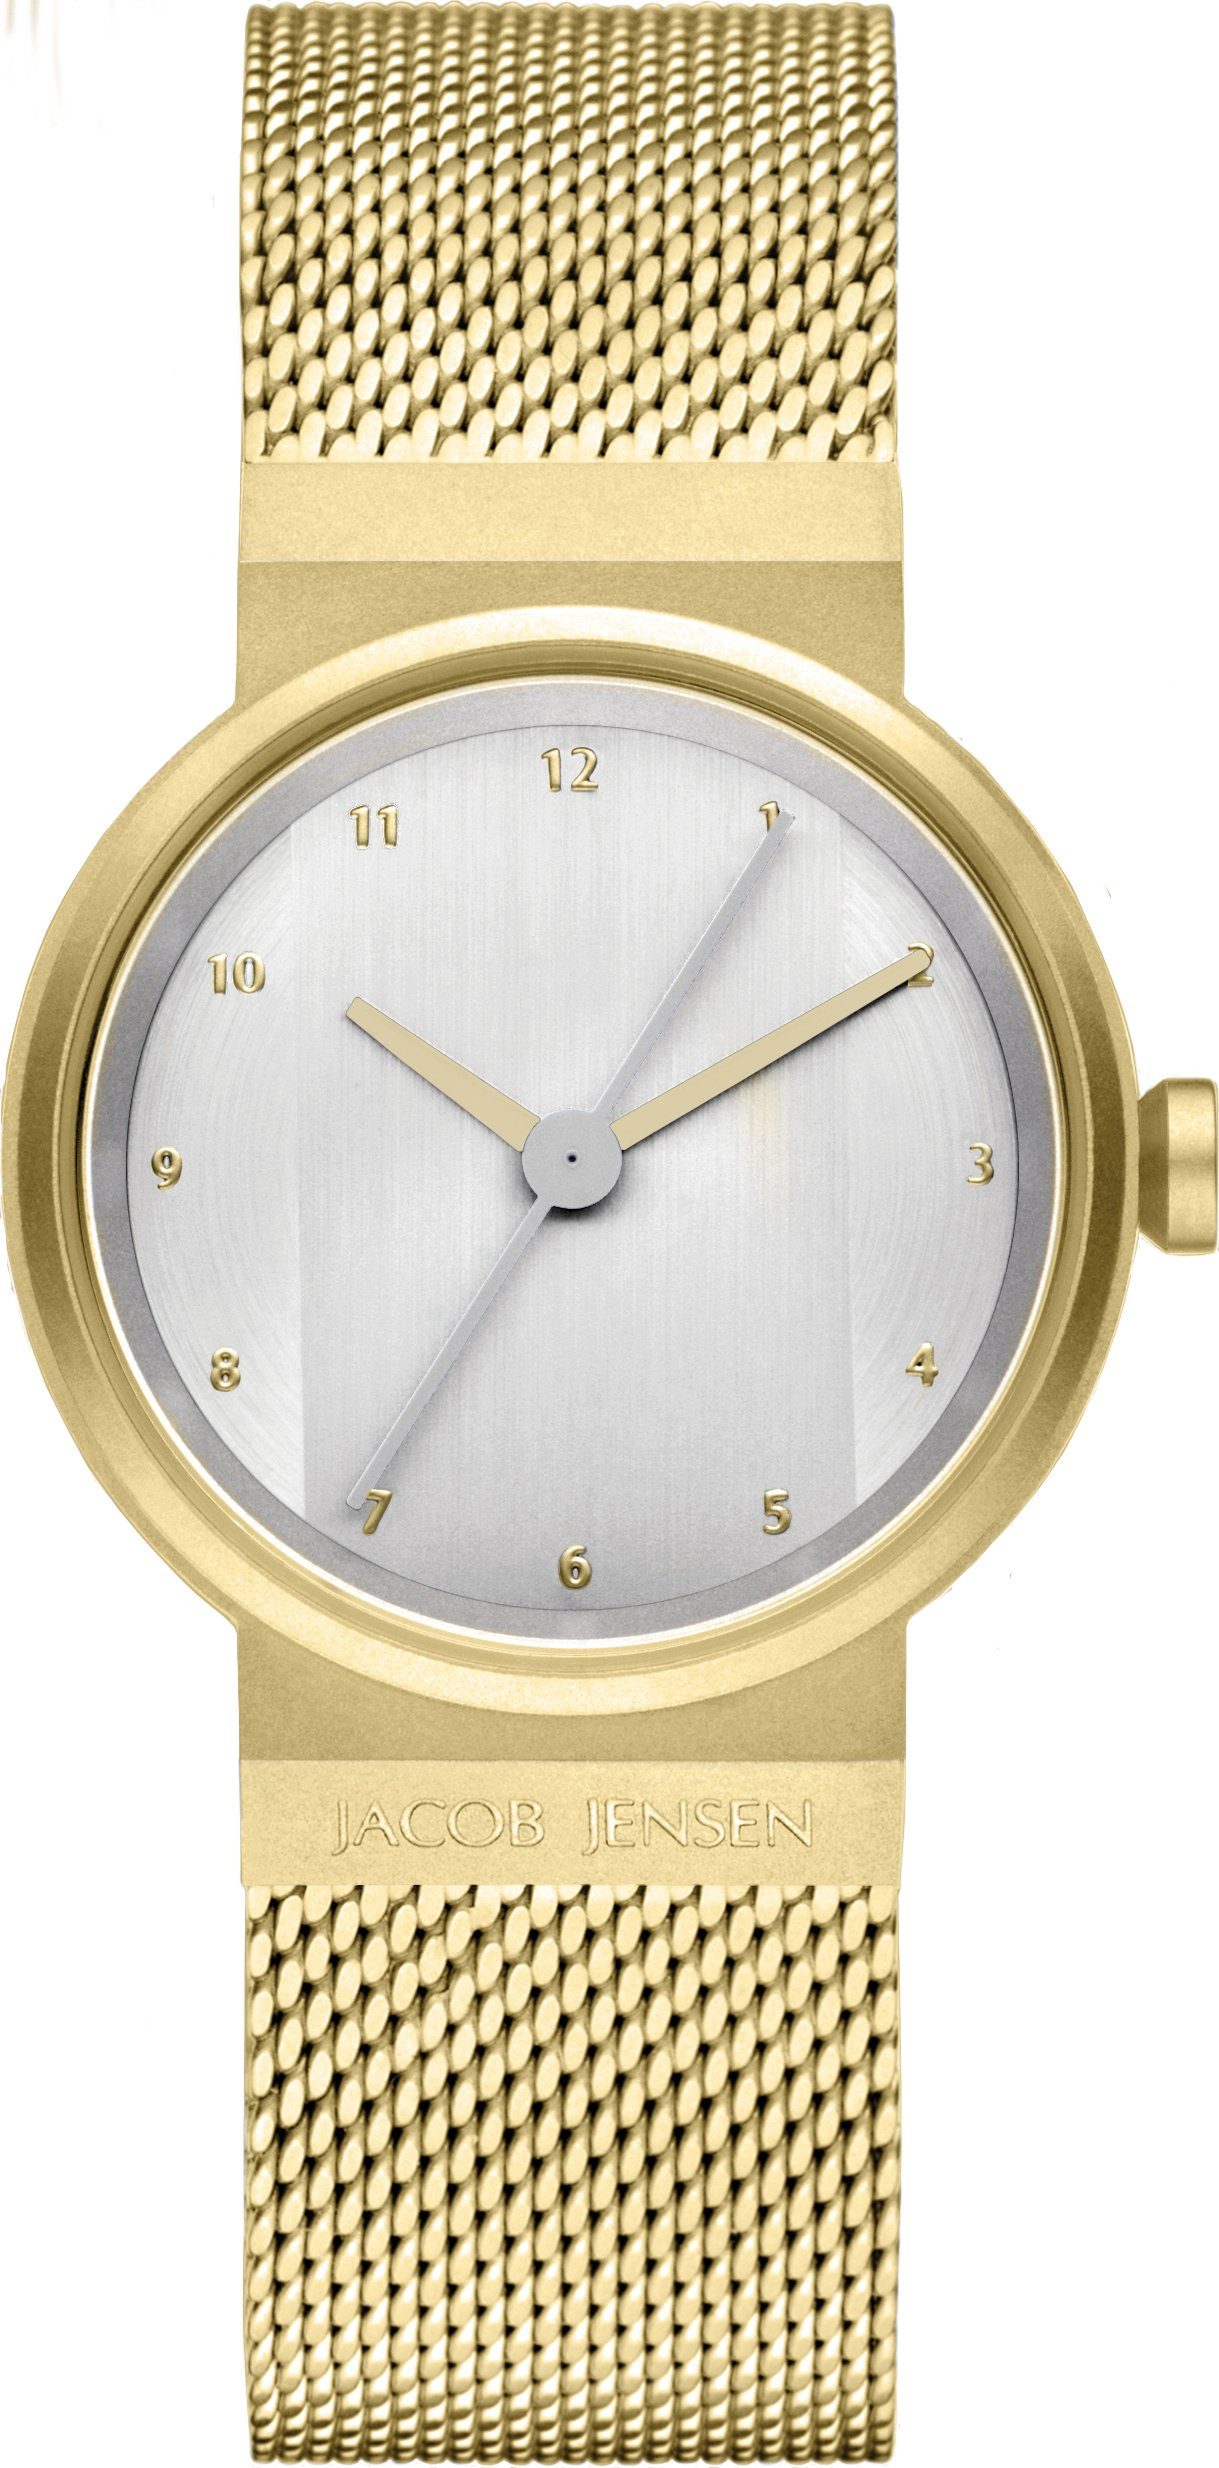 Damenuhr extra Sekundenzeiger langer Quarzuhr gold ⌀29mm, Edelstahl NEW Uhrband Design LINE Jacob Jensen Milanaise